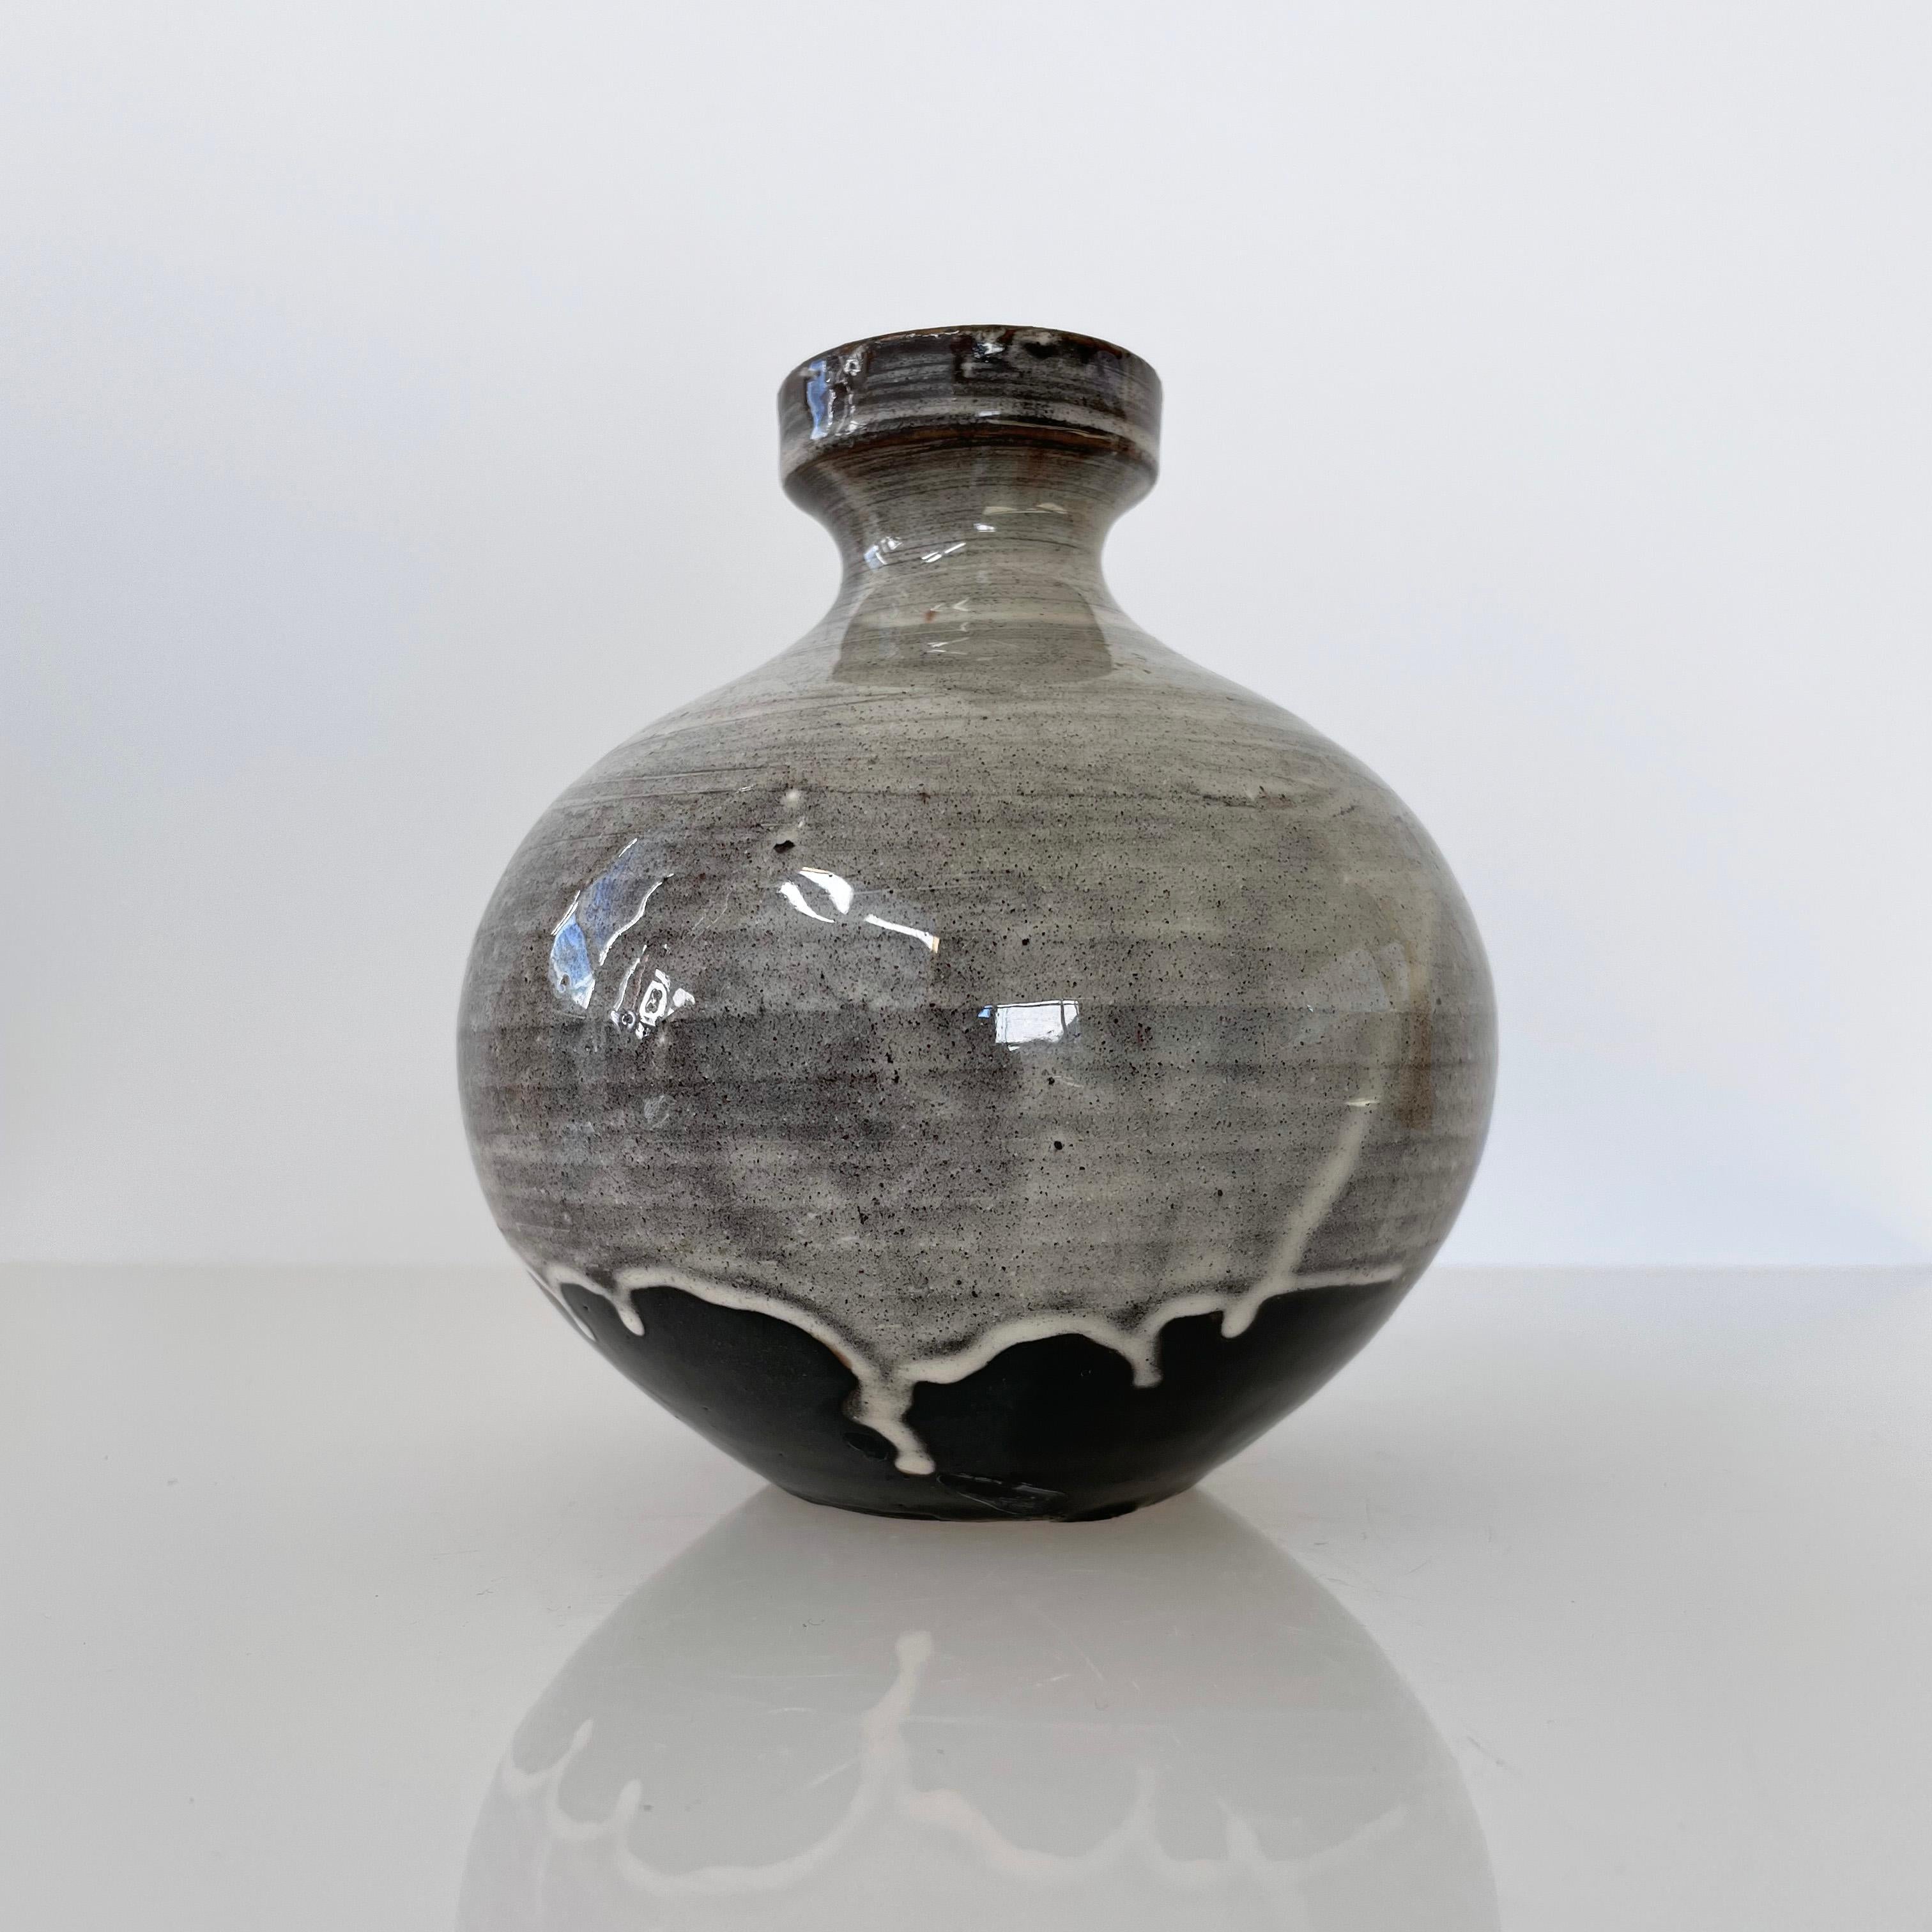 1960’s Hand Made Ceramic Vase from the Swiss Ceramisist, Jakob Gelzer. With grey & black glaze. With makers bird motif on base.
Designer: Jakob Gelzer
Producer: Jakob Gelzer Keramik, Switzerland
Condition: Excellent